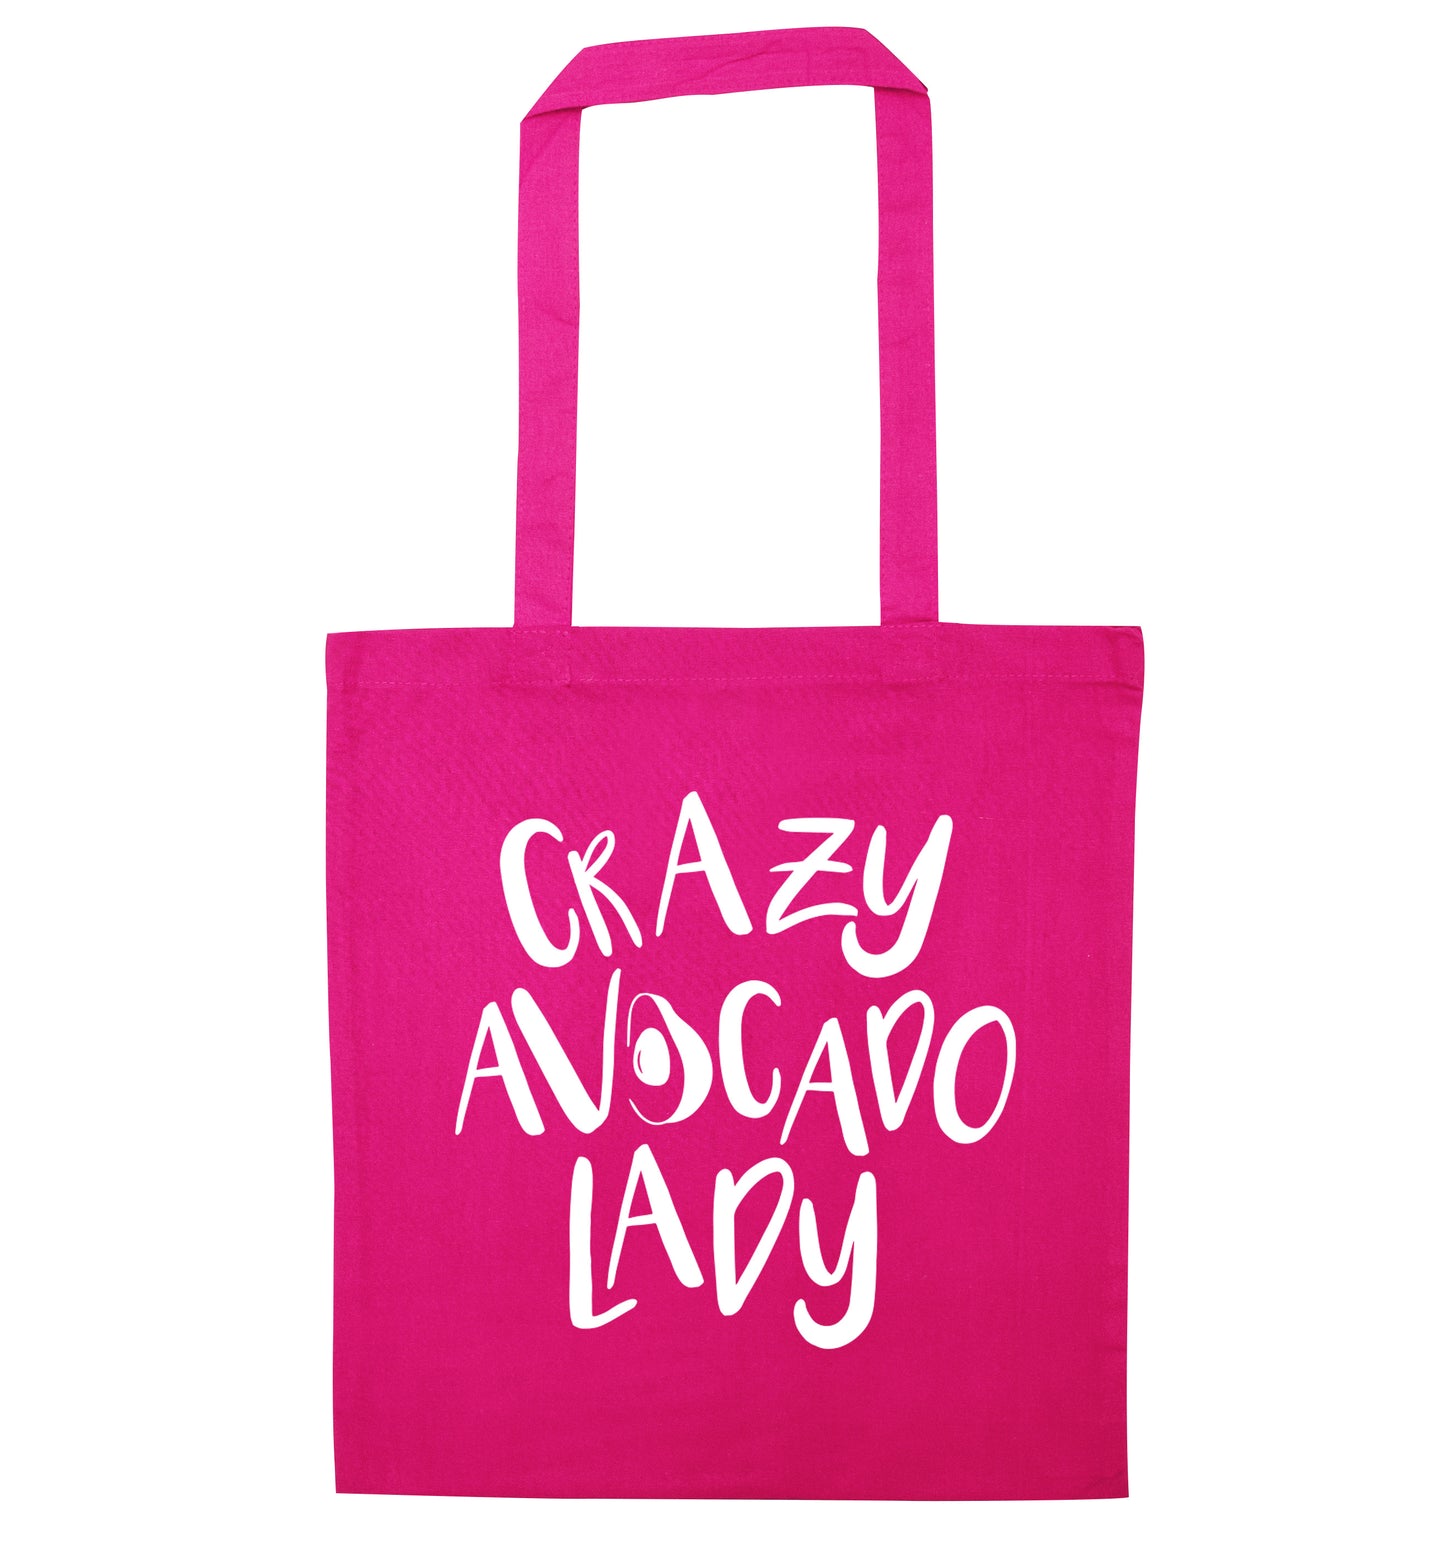 Crazy avocado lady pink tote bag